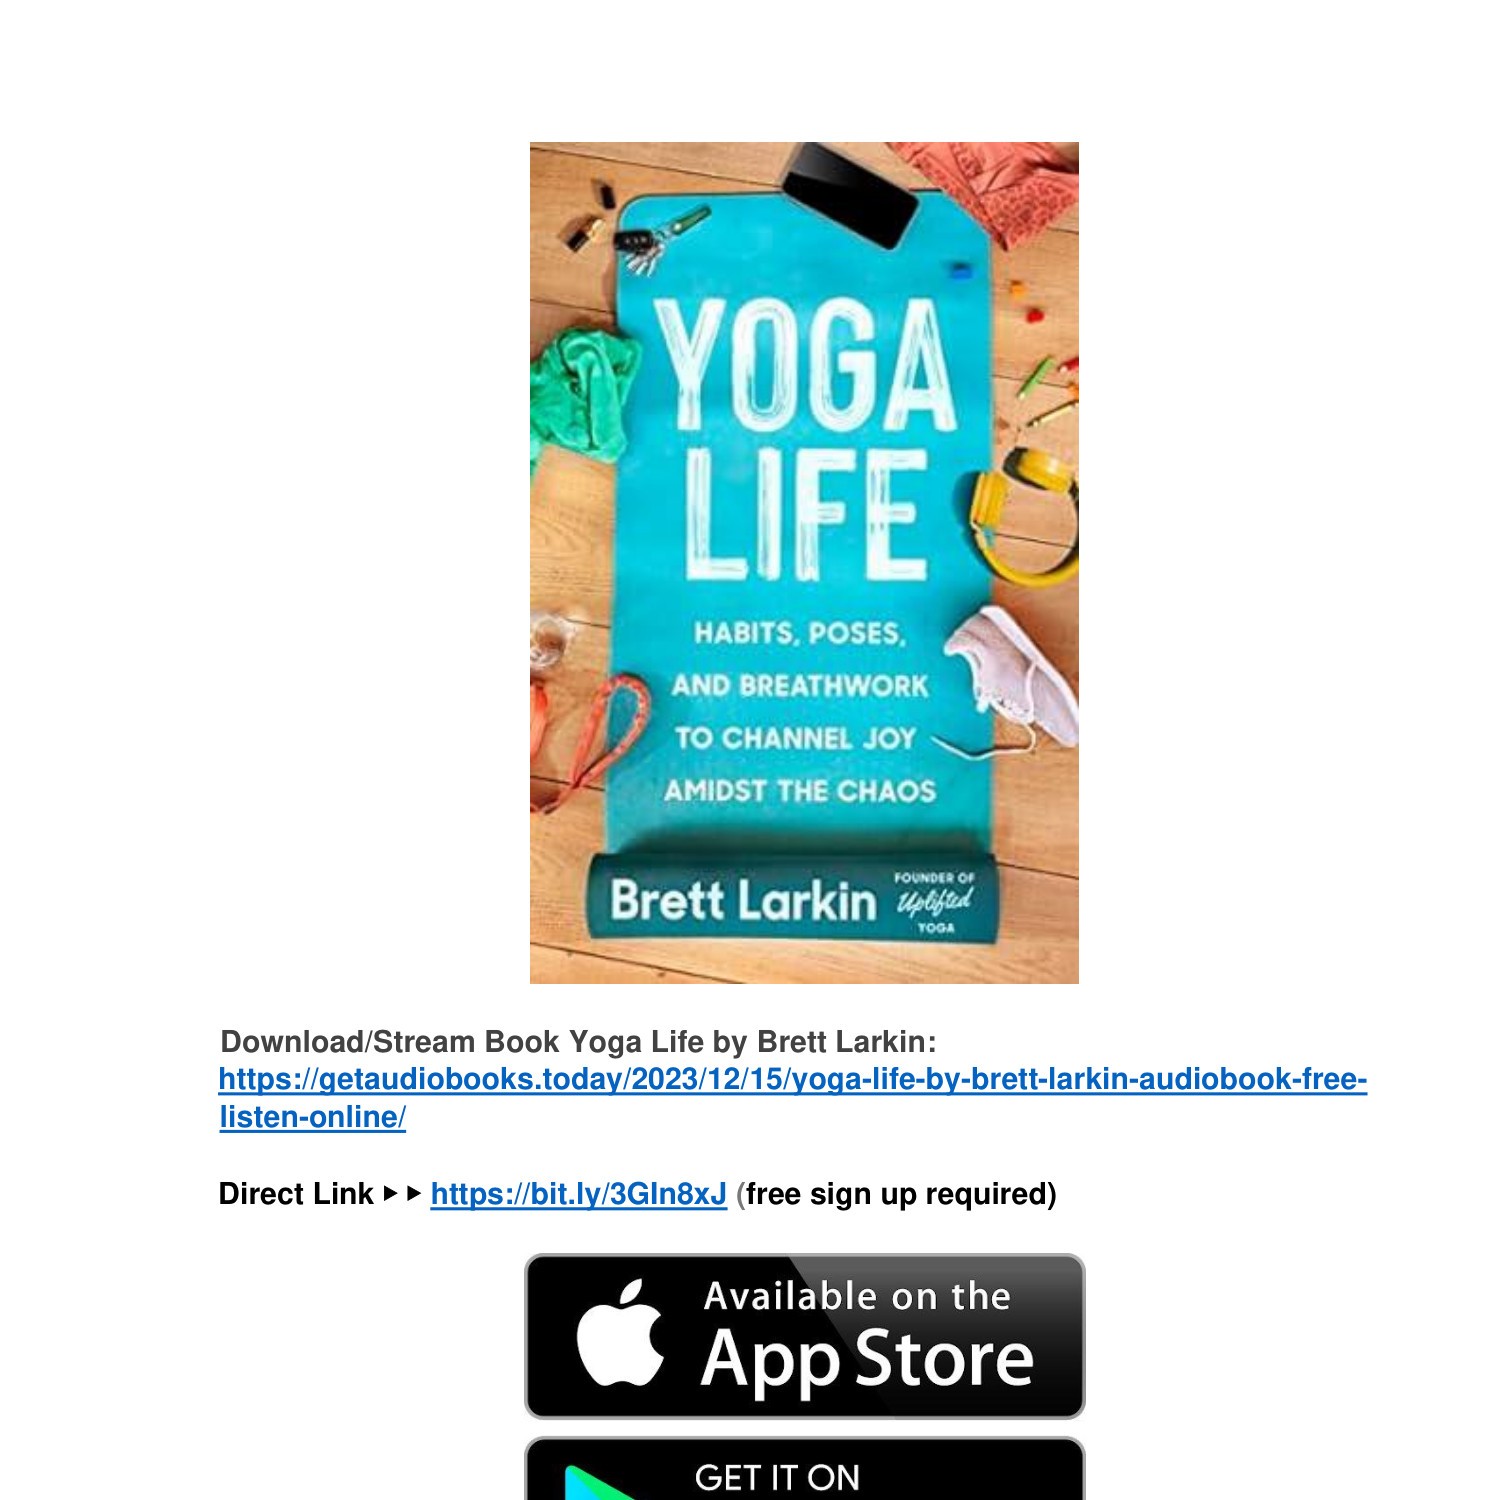 PDF Book Yoga Life by Brett Larkin Audiobook Free Download.pdf